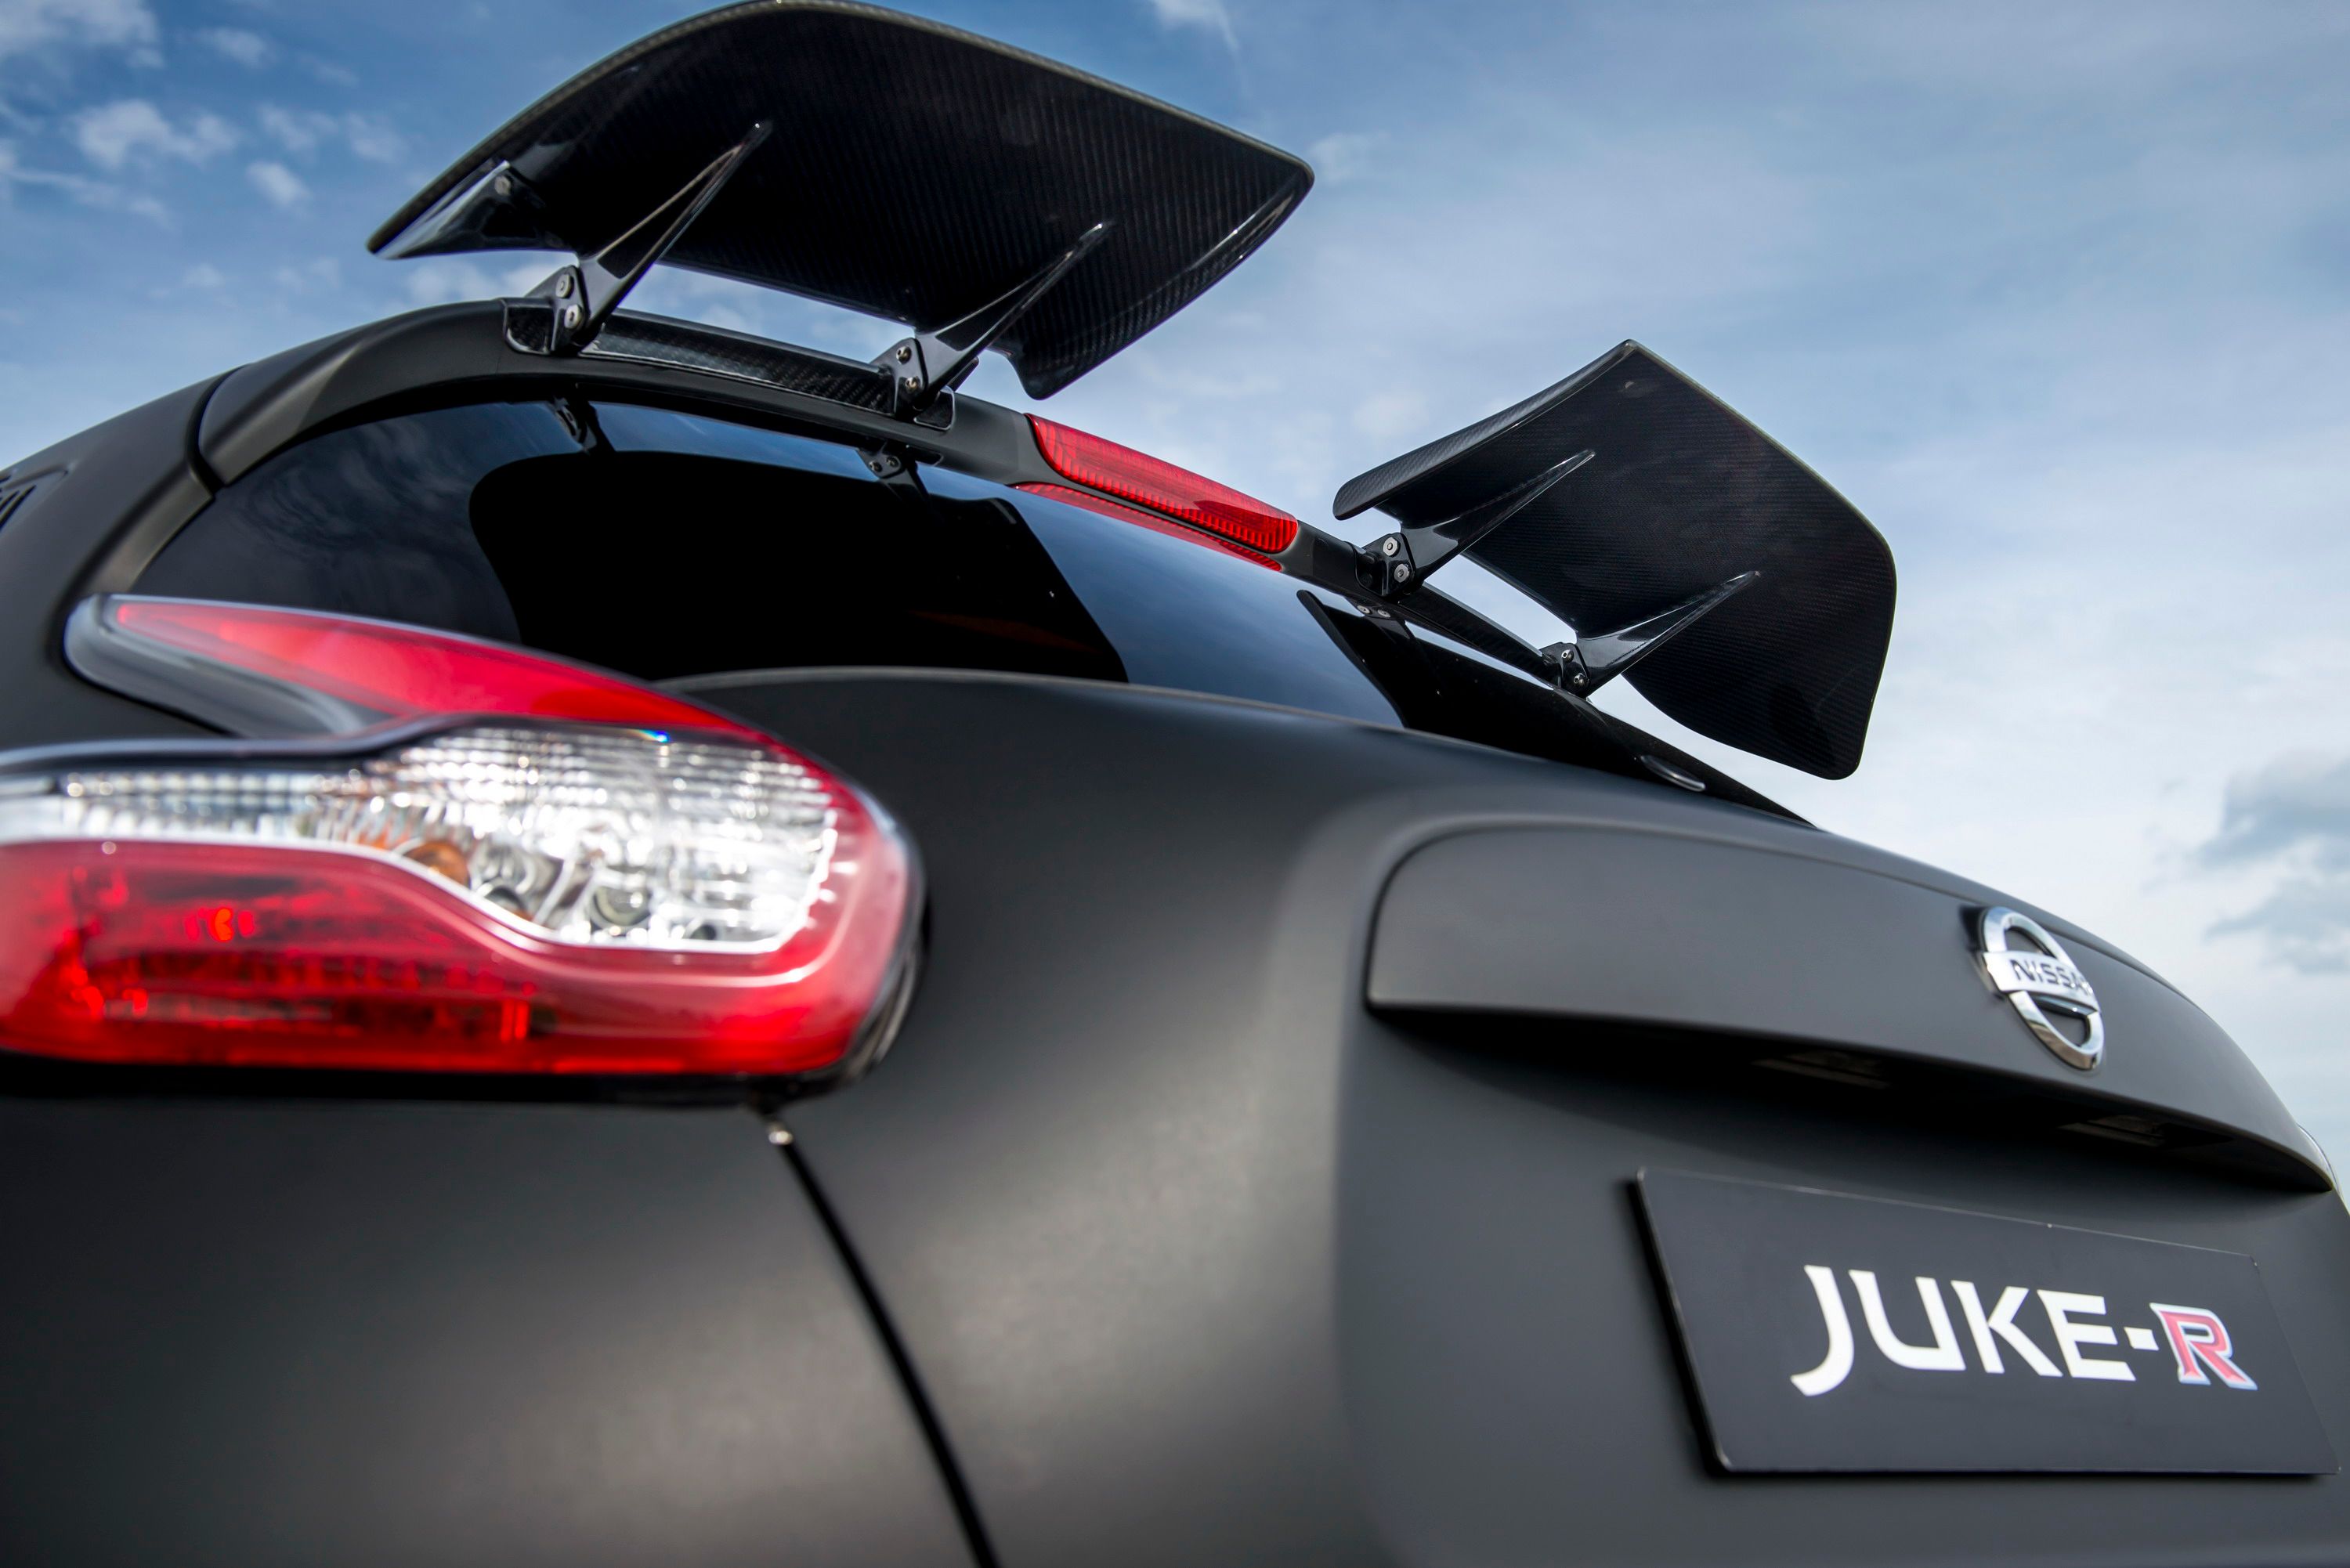 2016 Nissan Juke-R 2.0 Concept